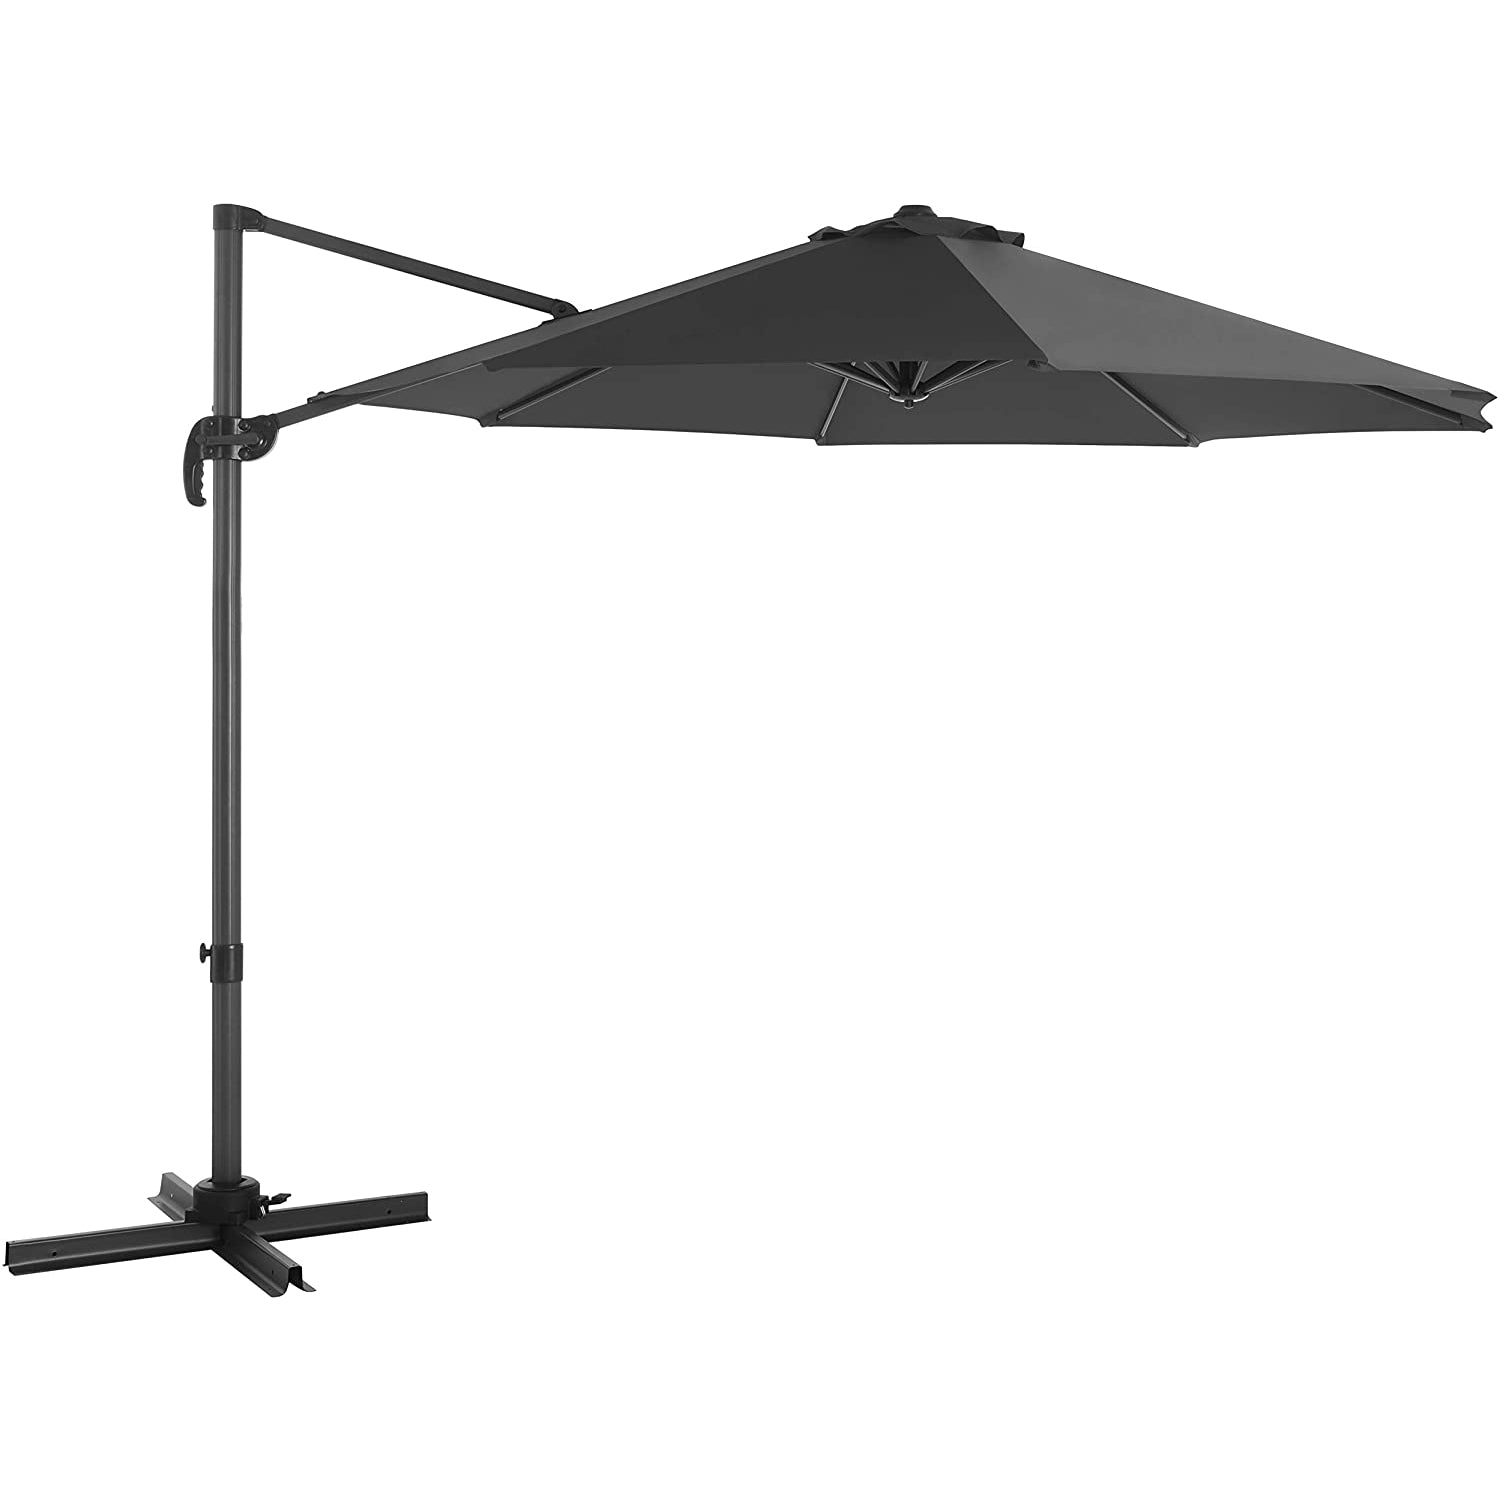 Nancy's Forestview Parasol - Hanging parasol - UPF 50+ - Rotatable - Adjustable - 3m Diameter - Gray